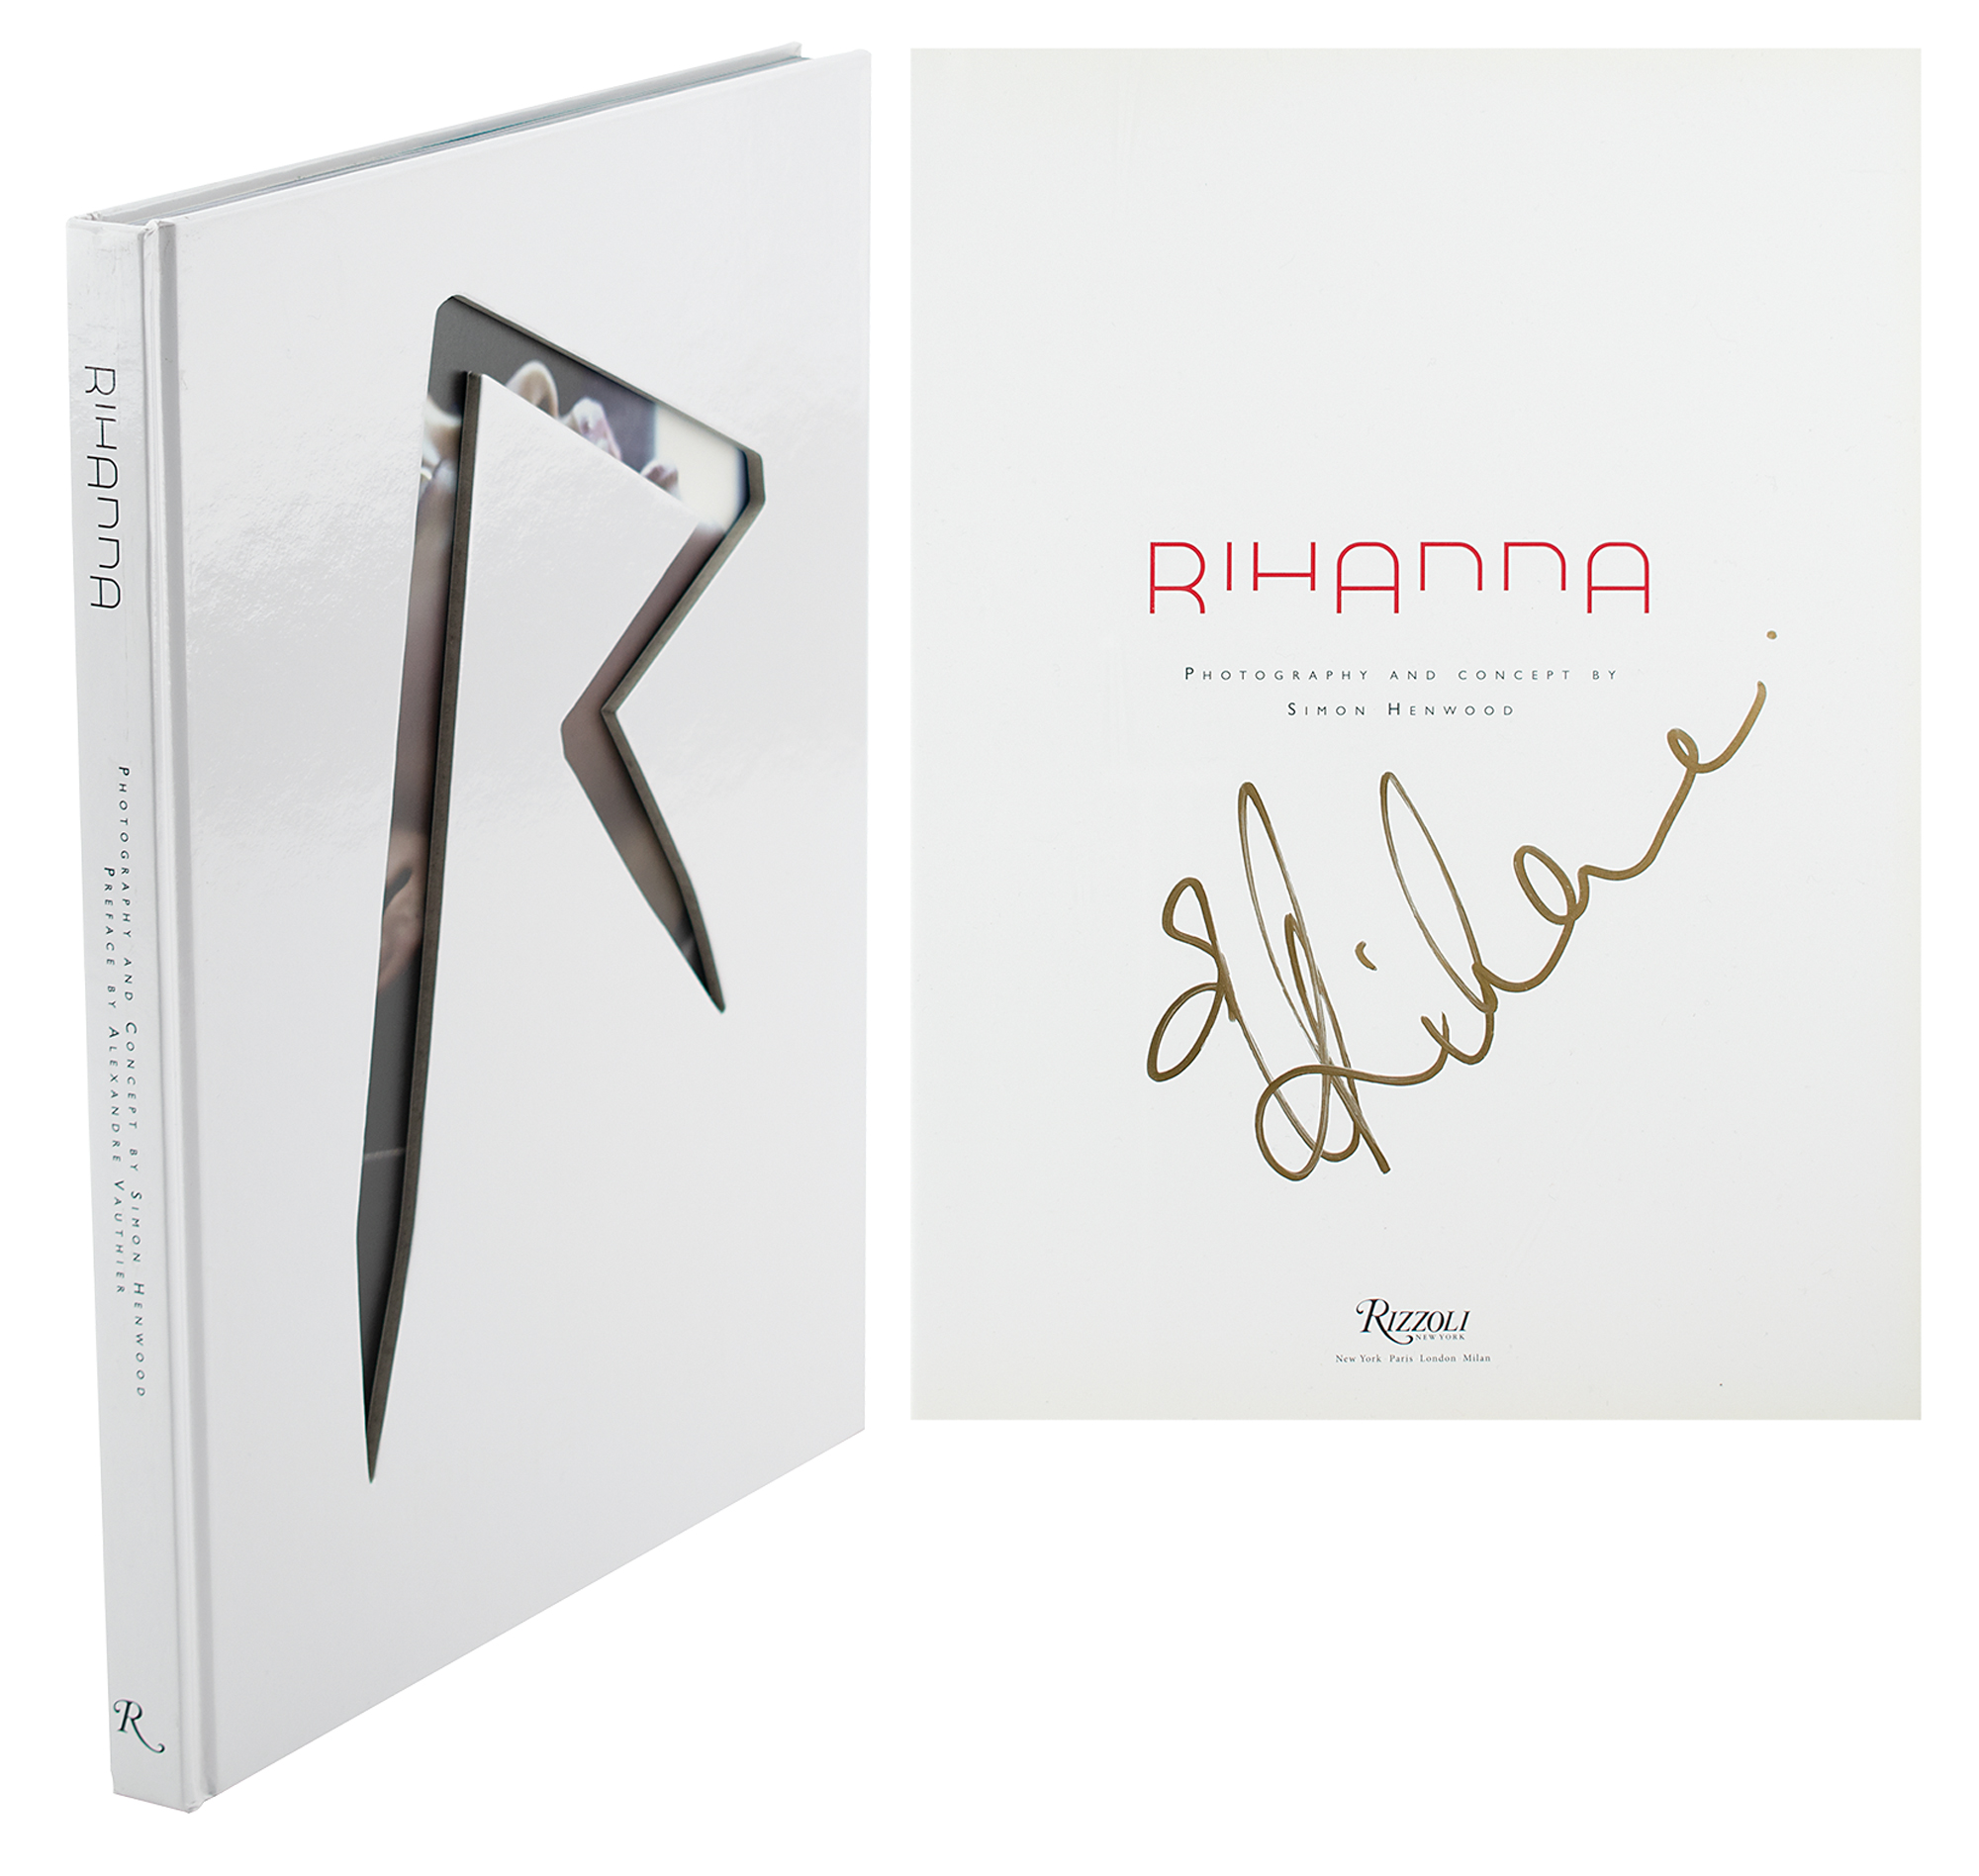 Lot #680 Rihanna Signed Book